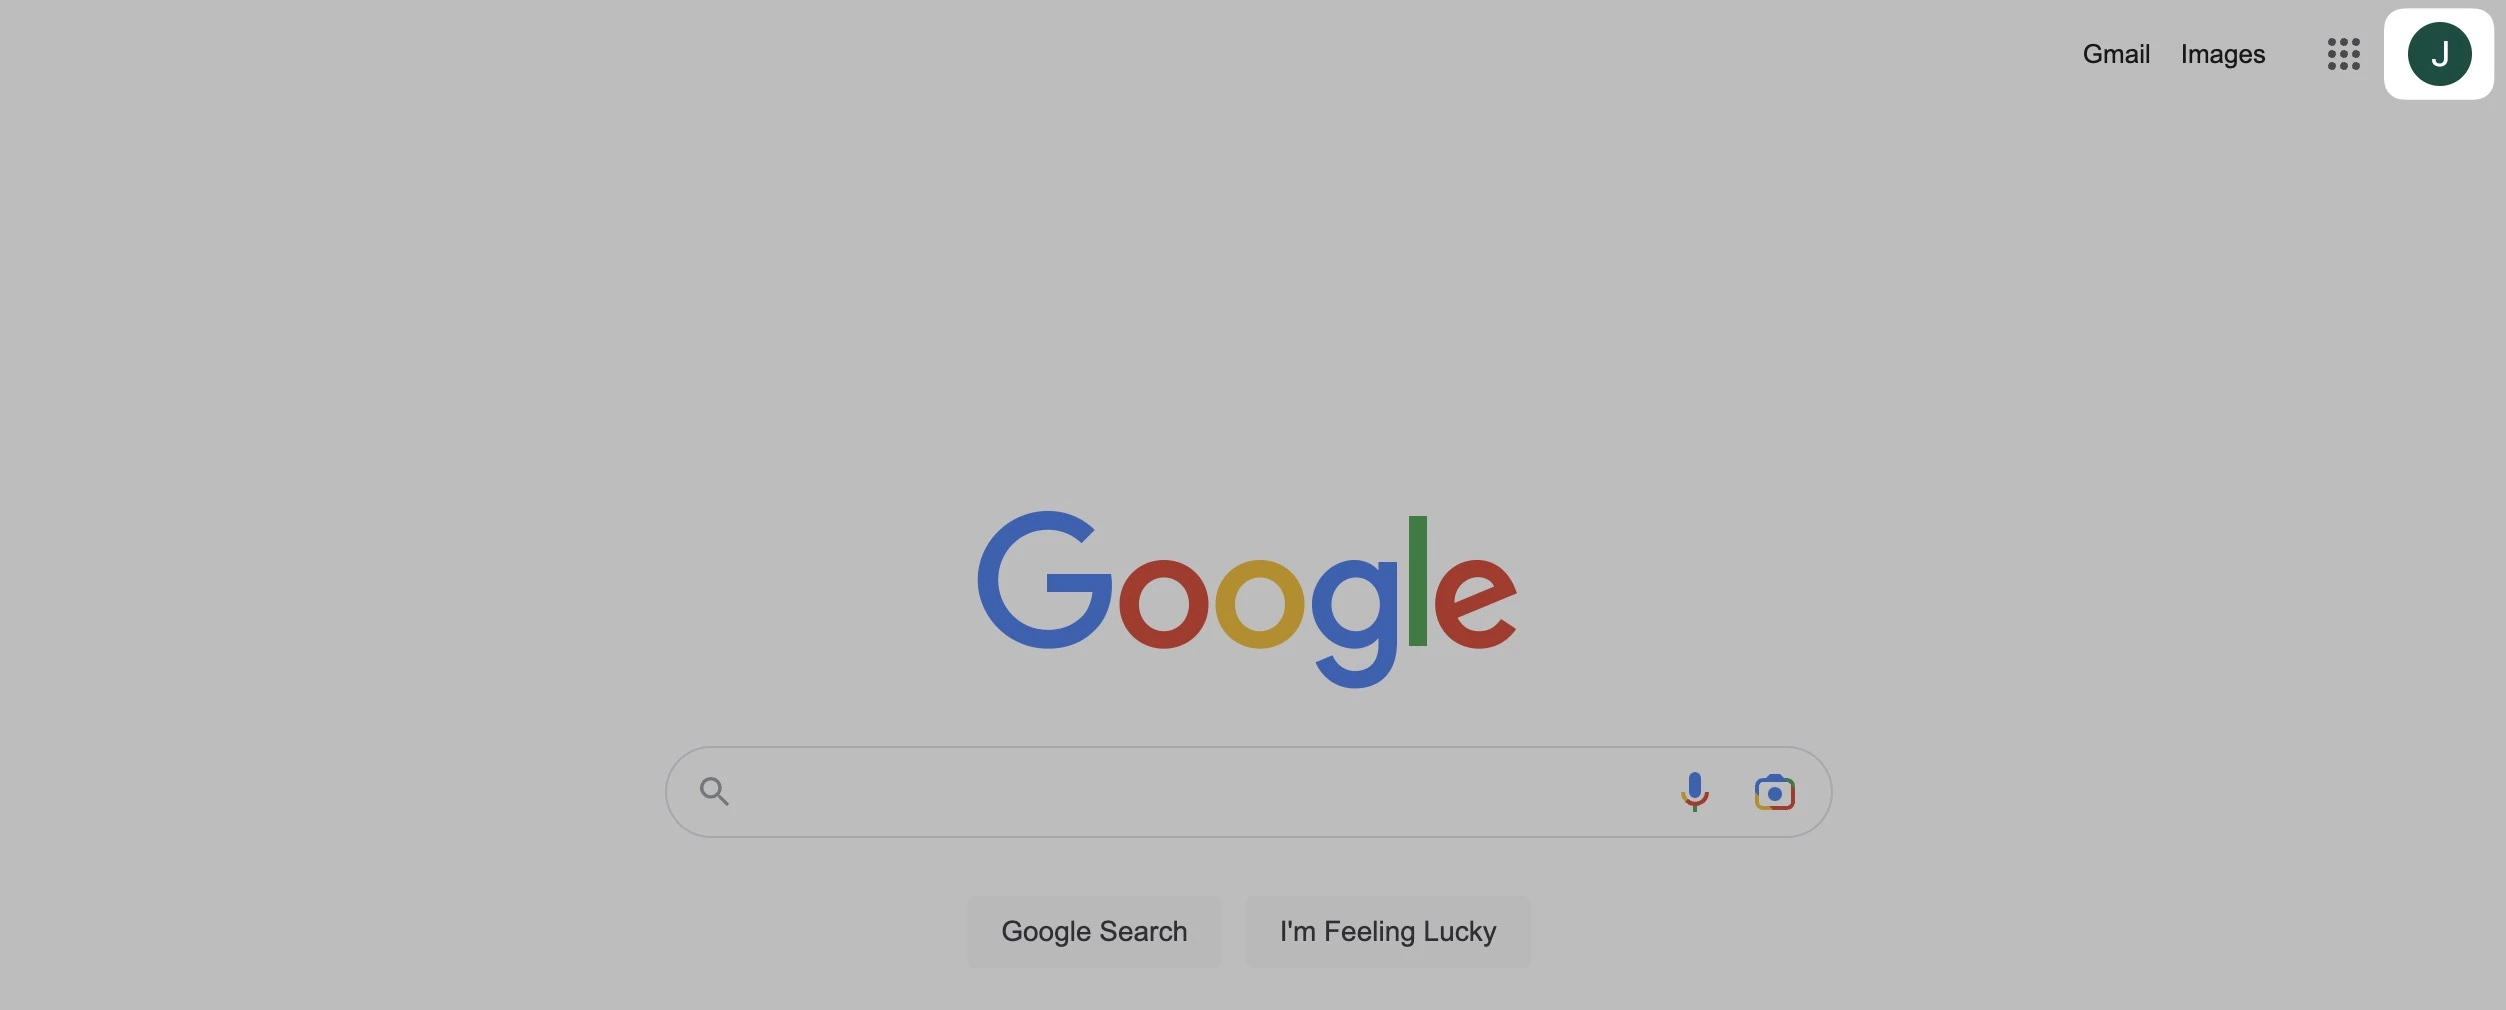 Google Search Window